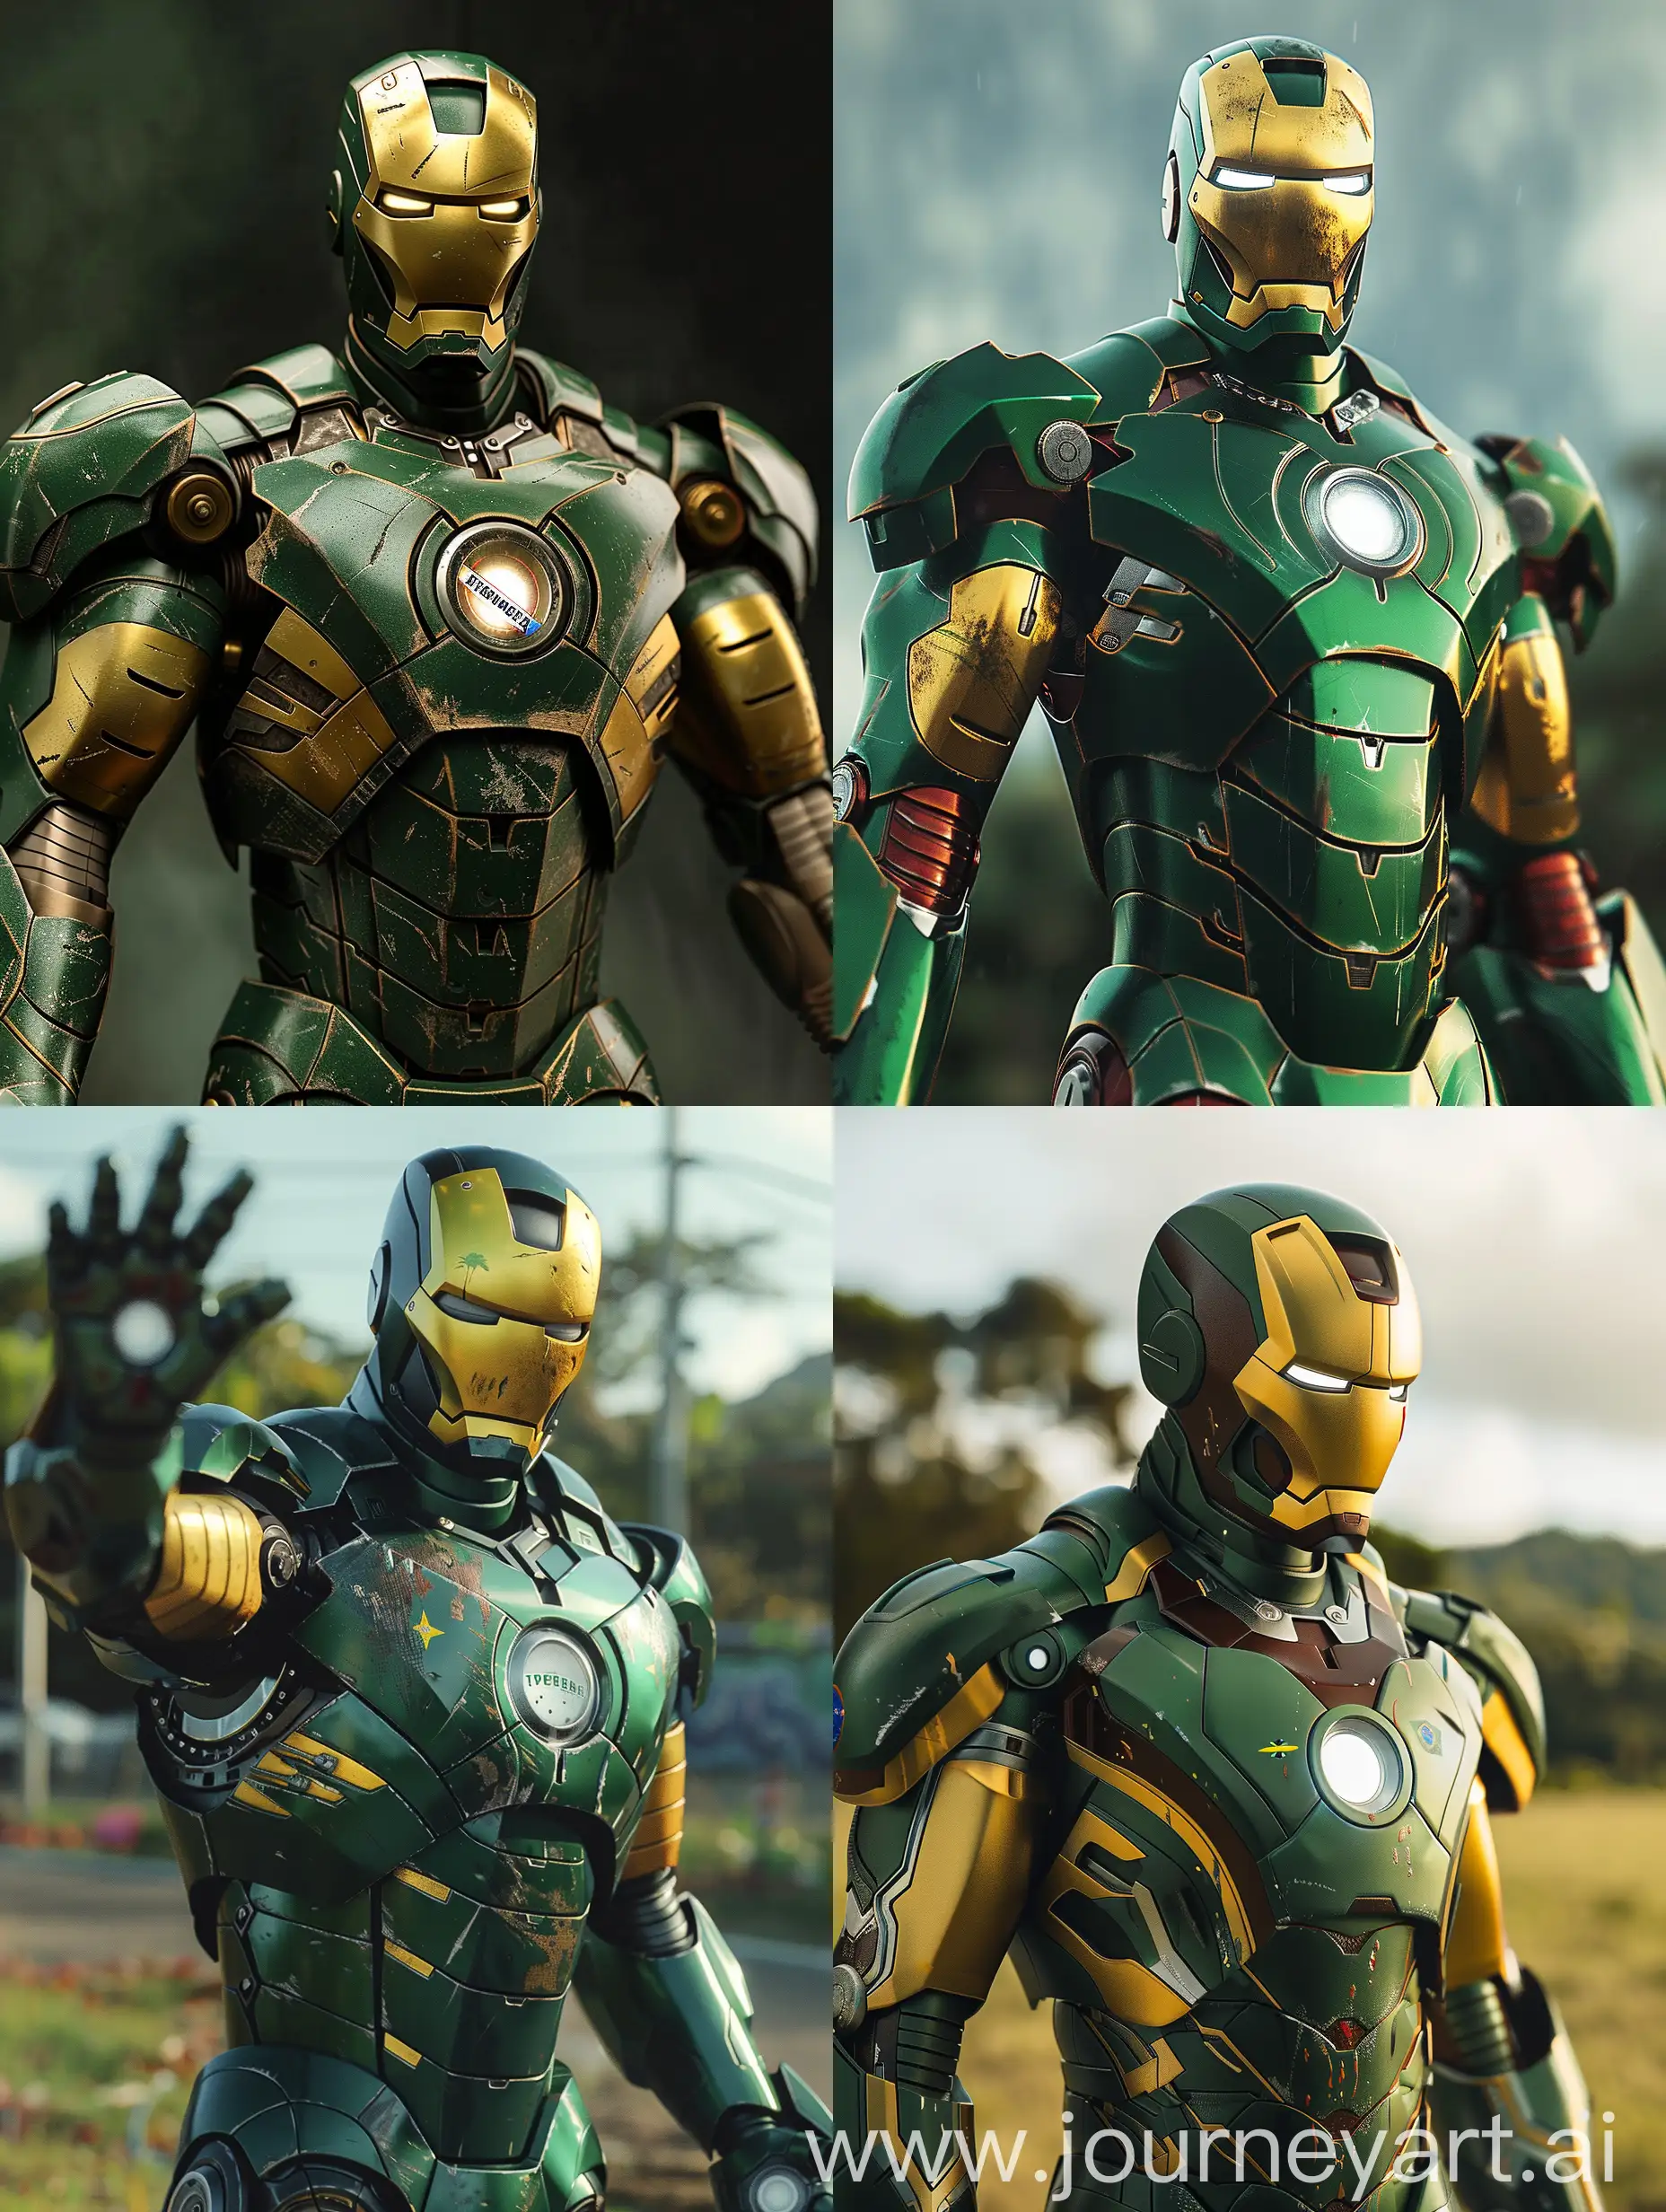 Iron-Man-Embraces-Brazilian-Culture-in-Hyperrealistic-Hyperealistic-Art